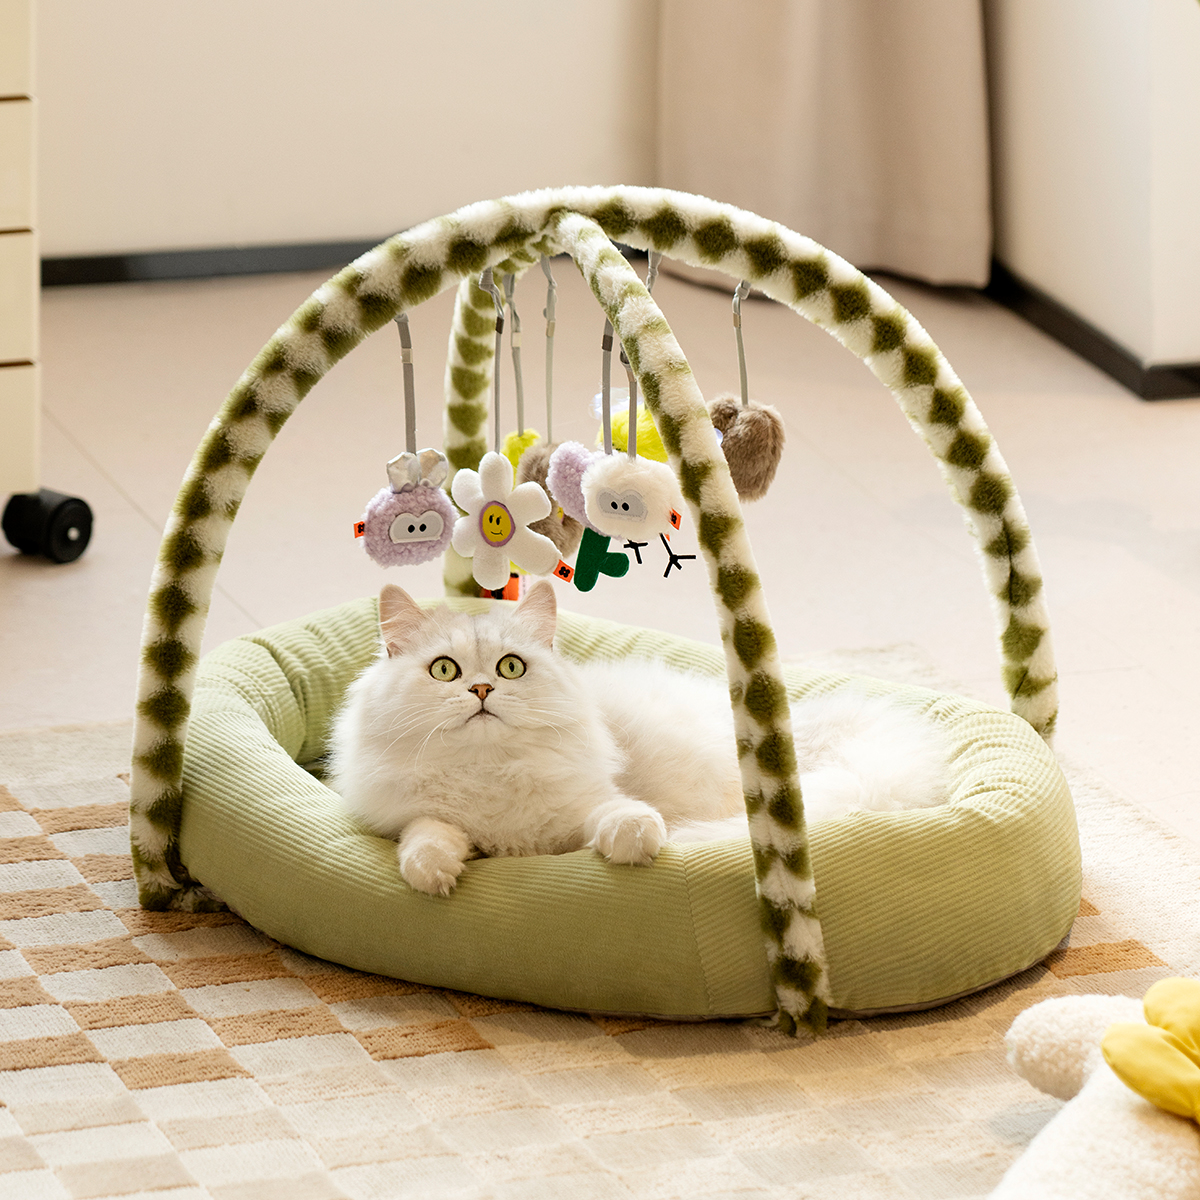 Mewoofun Four-Season Universal Cat Mat Green Cat Supply